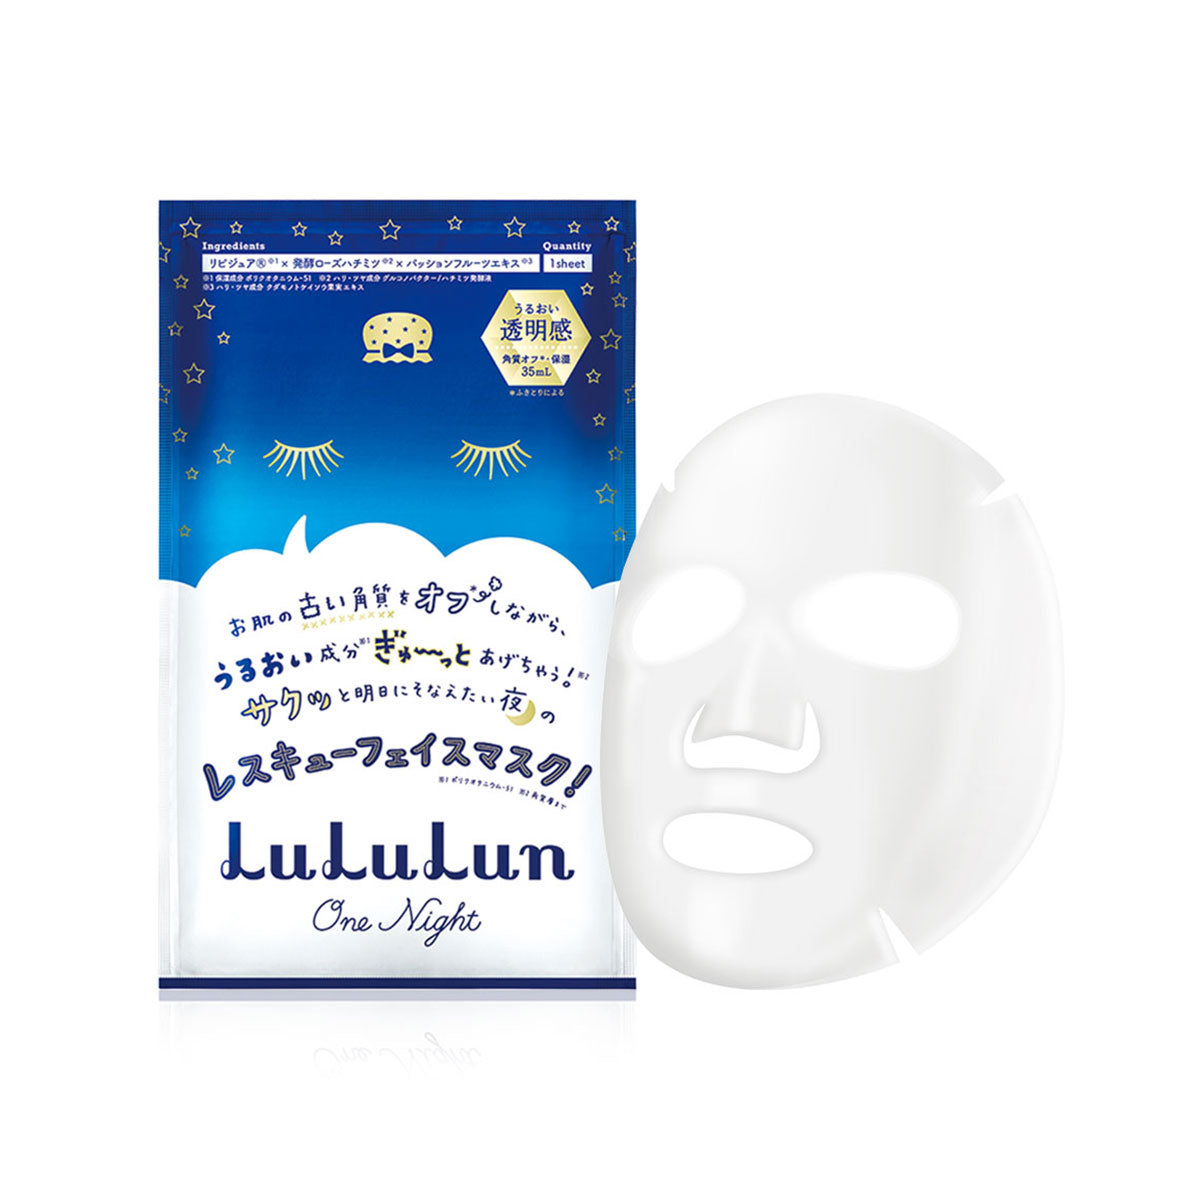 Lululun One Night Rescue Clarify Skin 1 Sheet